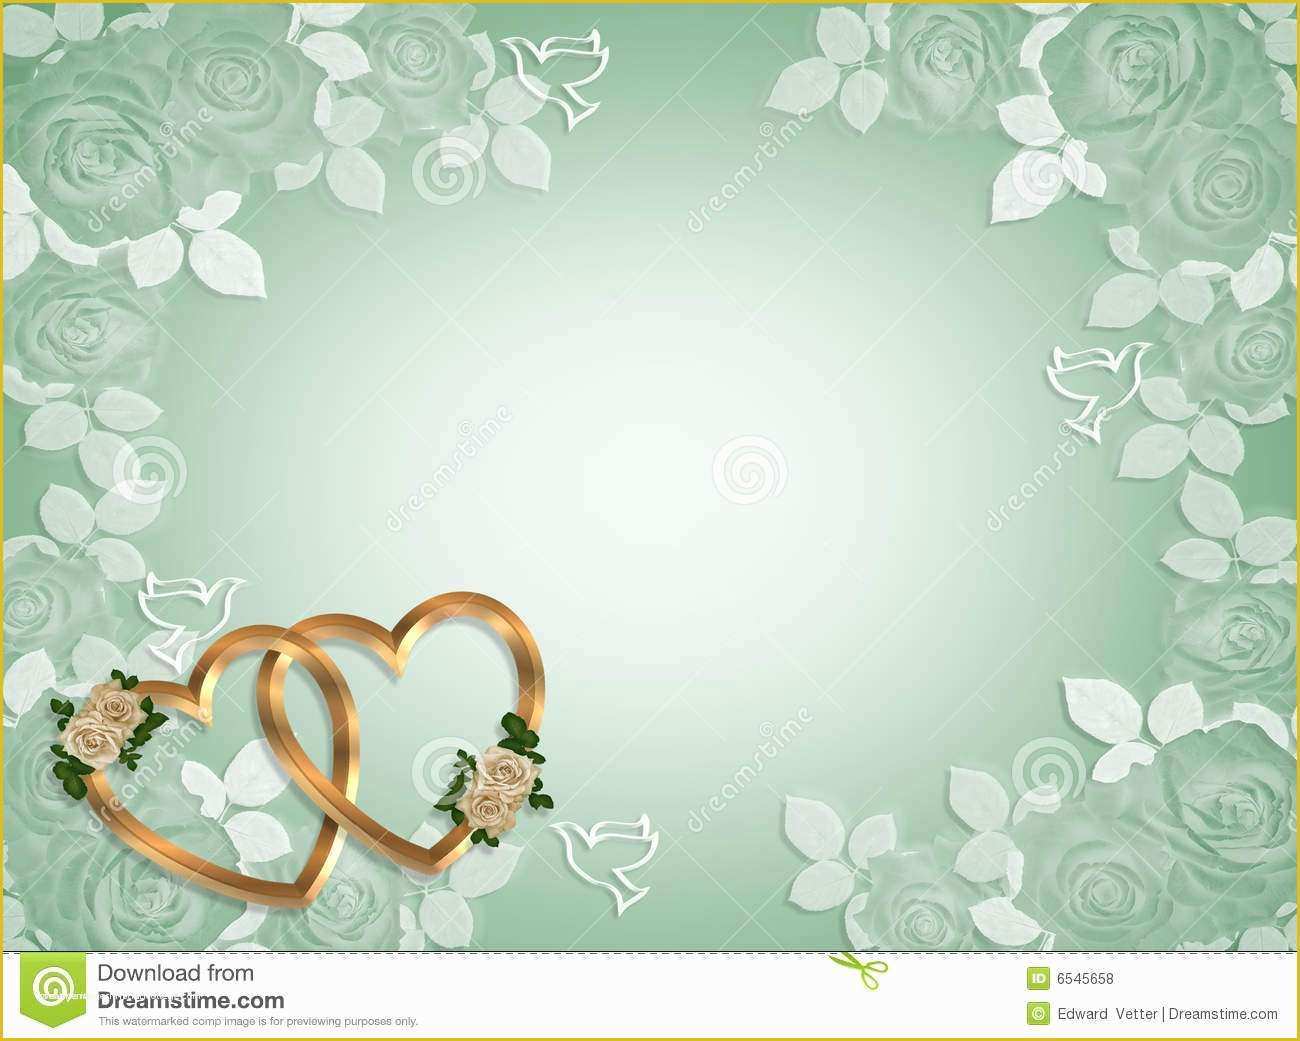 Free Wedding Invitation Templates Of Wedding Invitation Background Designs Free Luxury